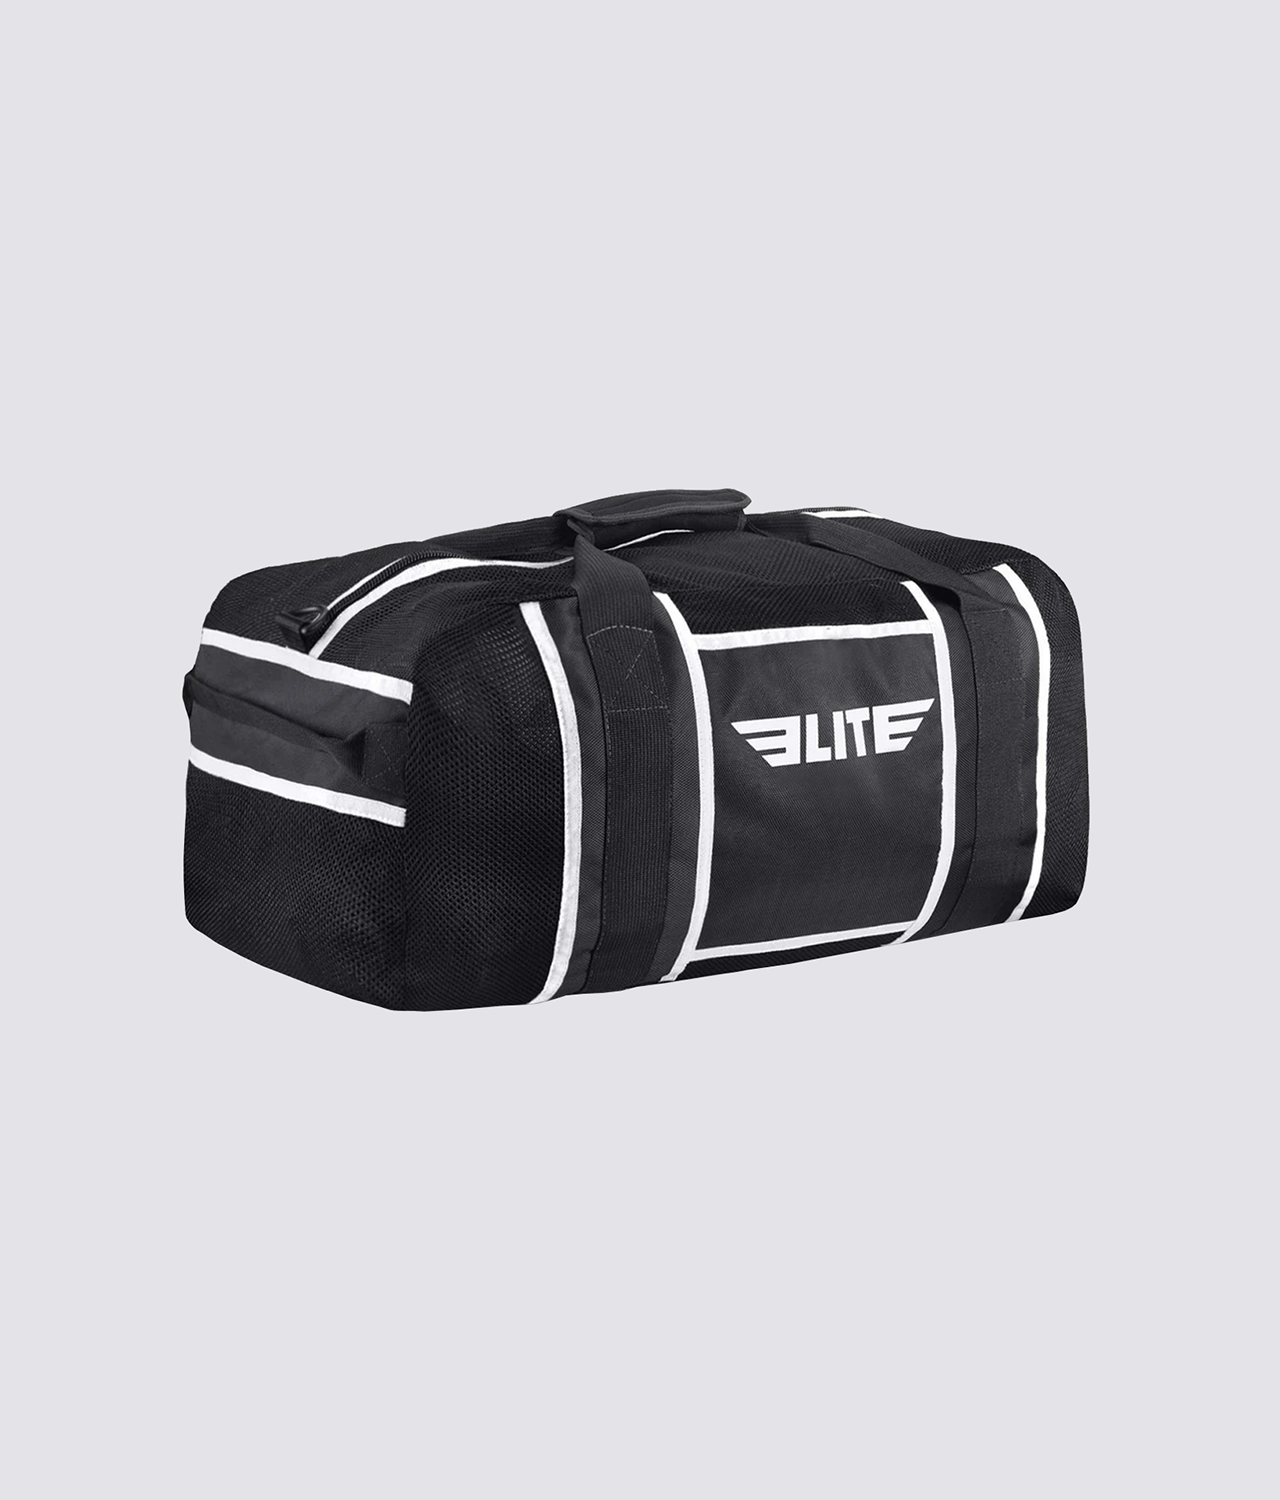 Elite Sports Warrior Black/White Strip Large Duffel Crossfit Gear Gym Bag